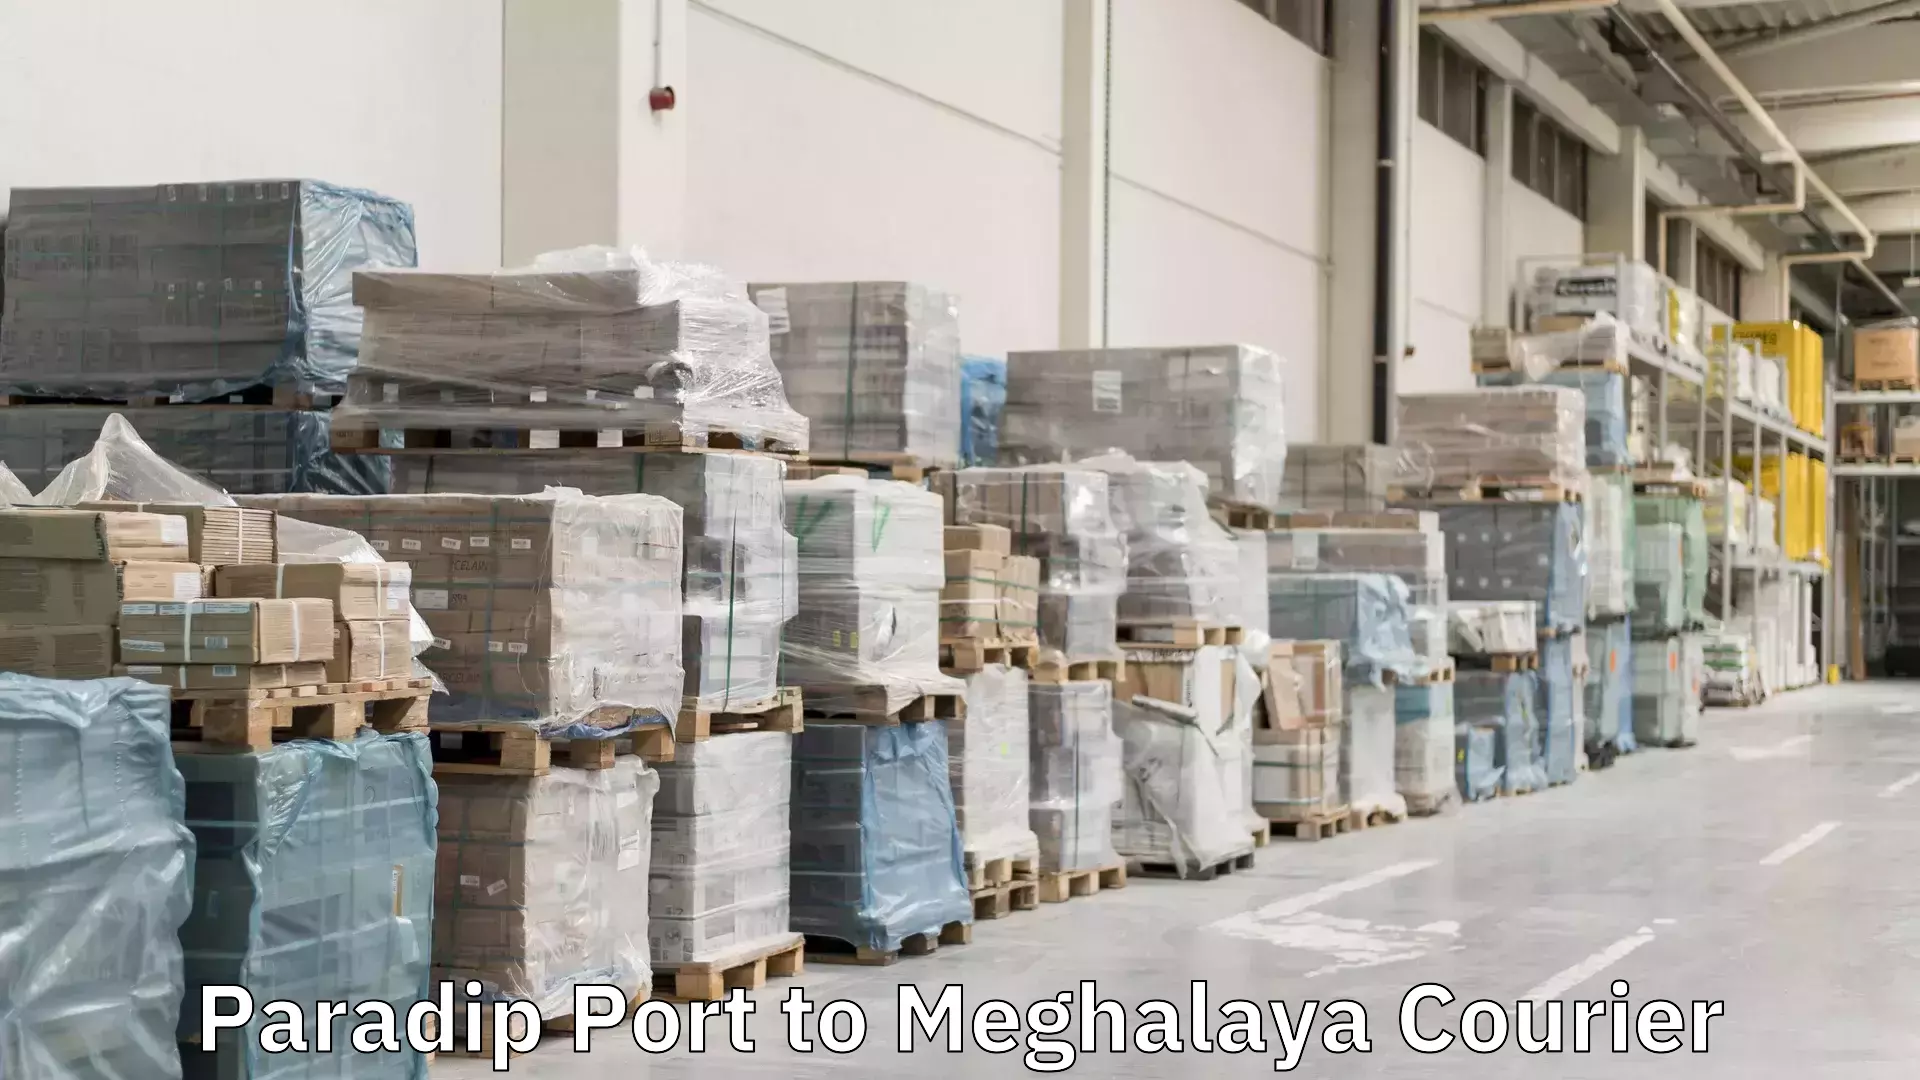 Express postal services Paradip Port to Meghalaya